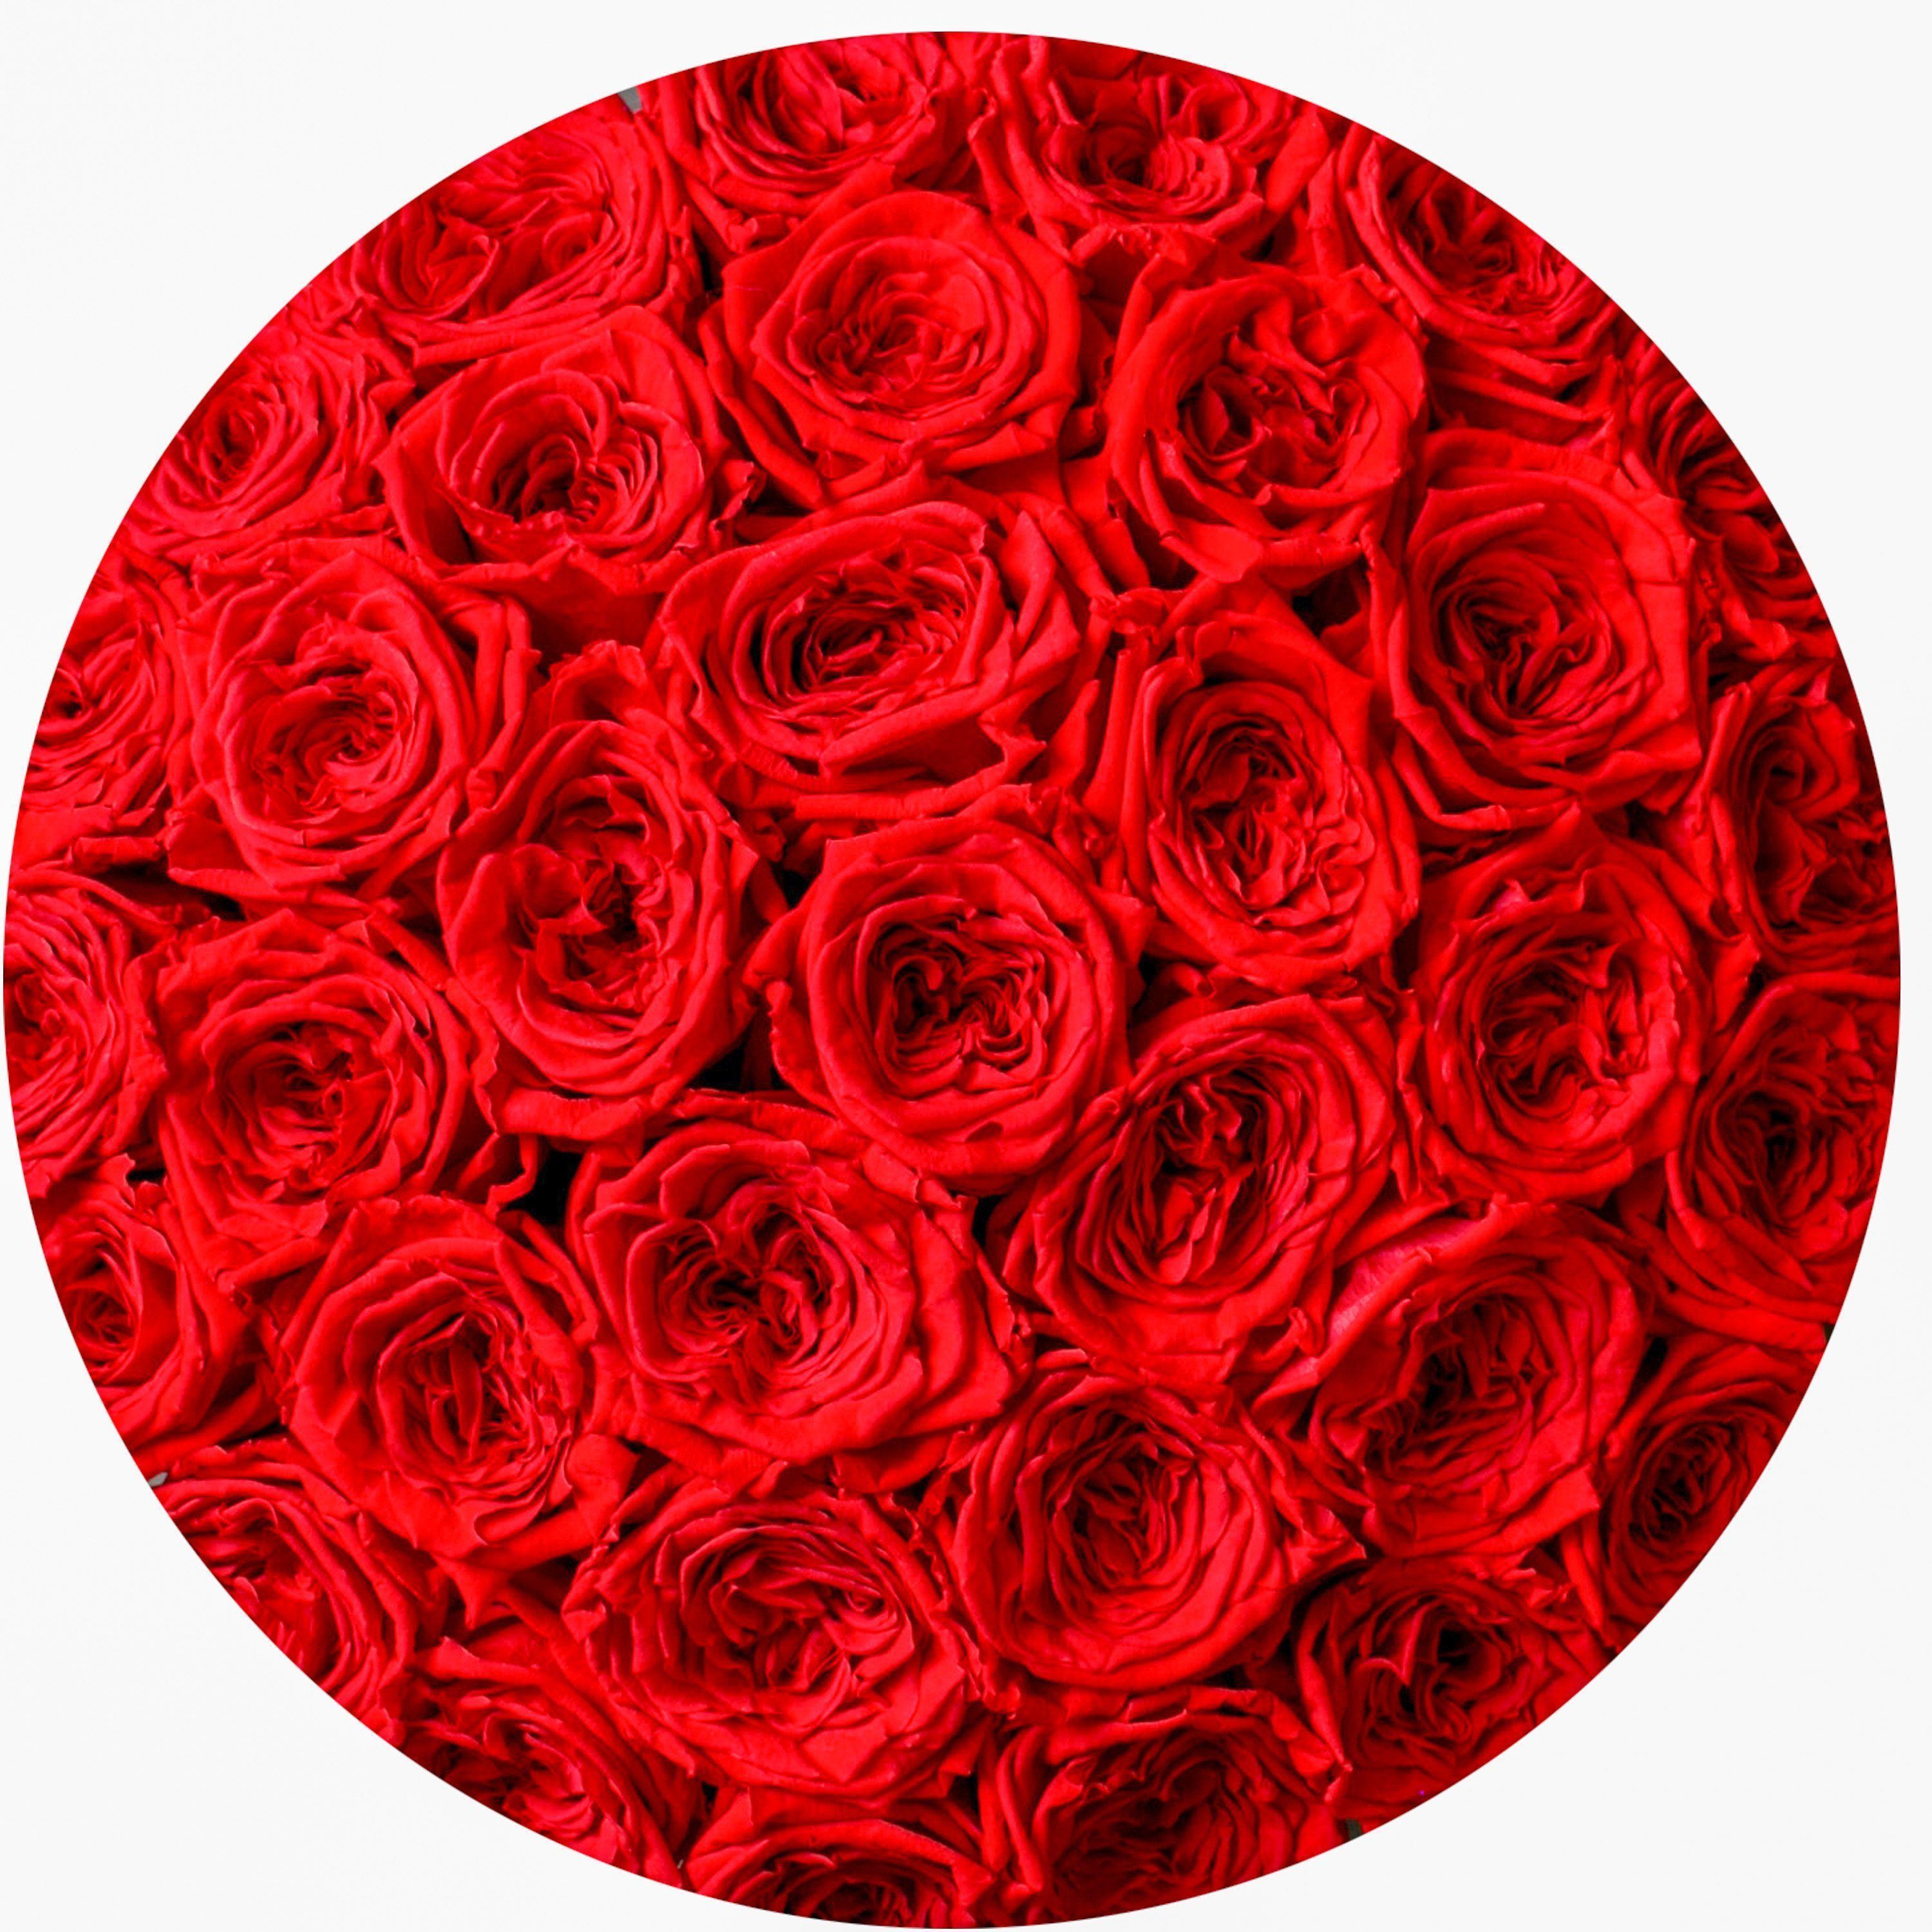 medium round box - gold - bright-red GARDEN roses eternity garden roses - the million roses